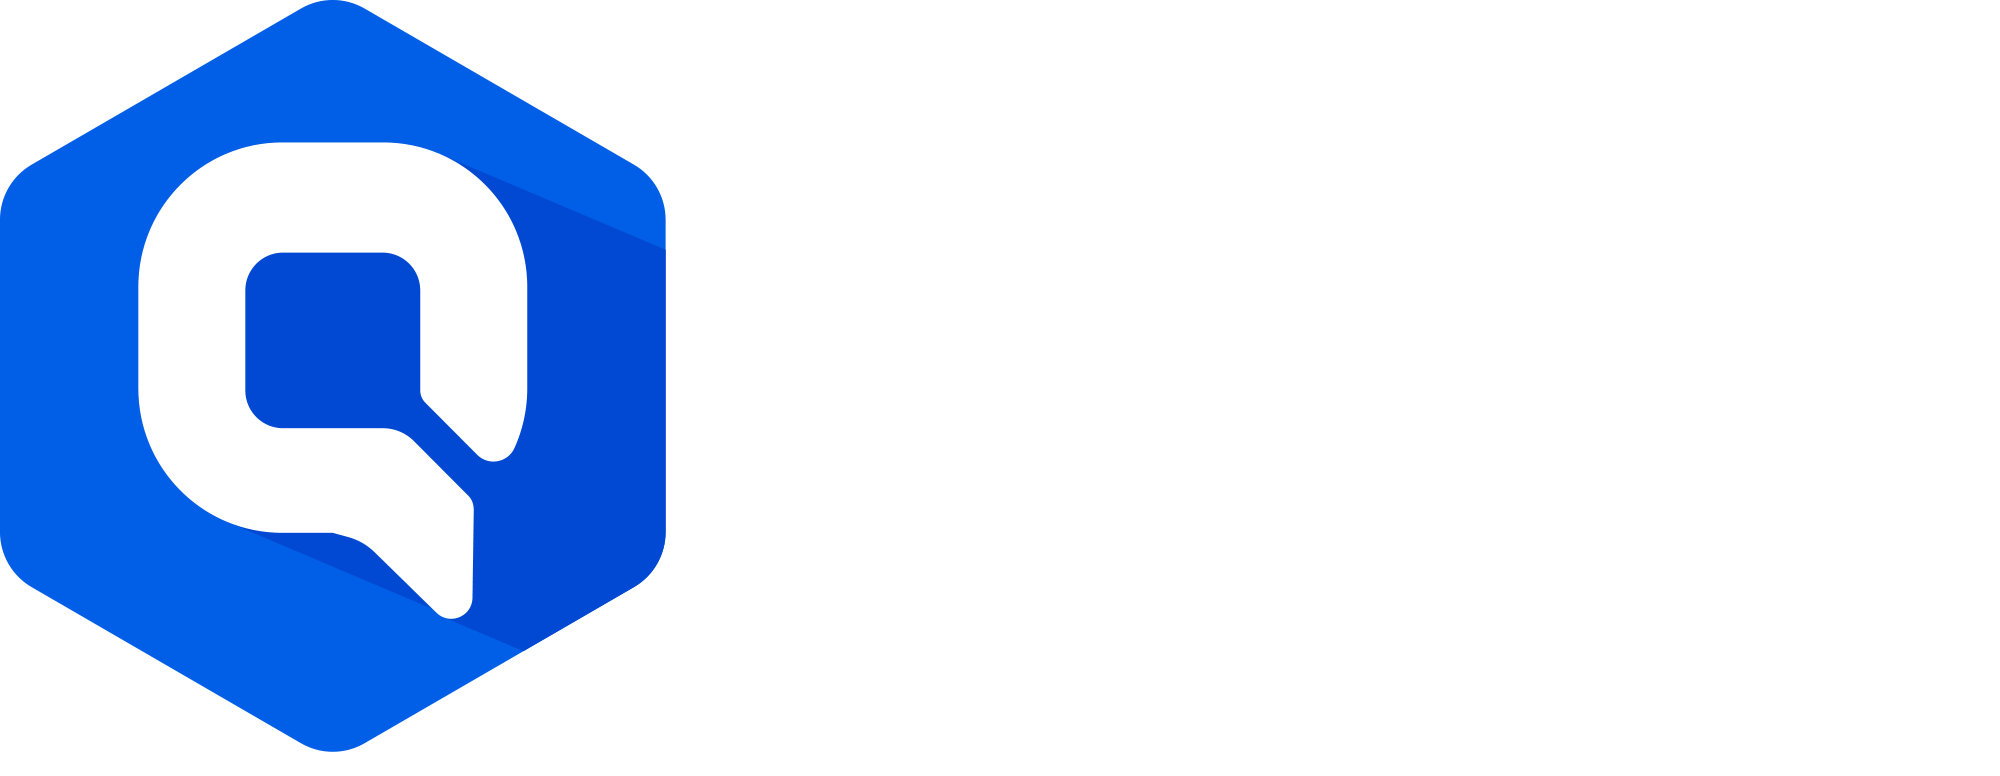 Quality Resource